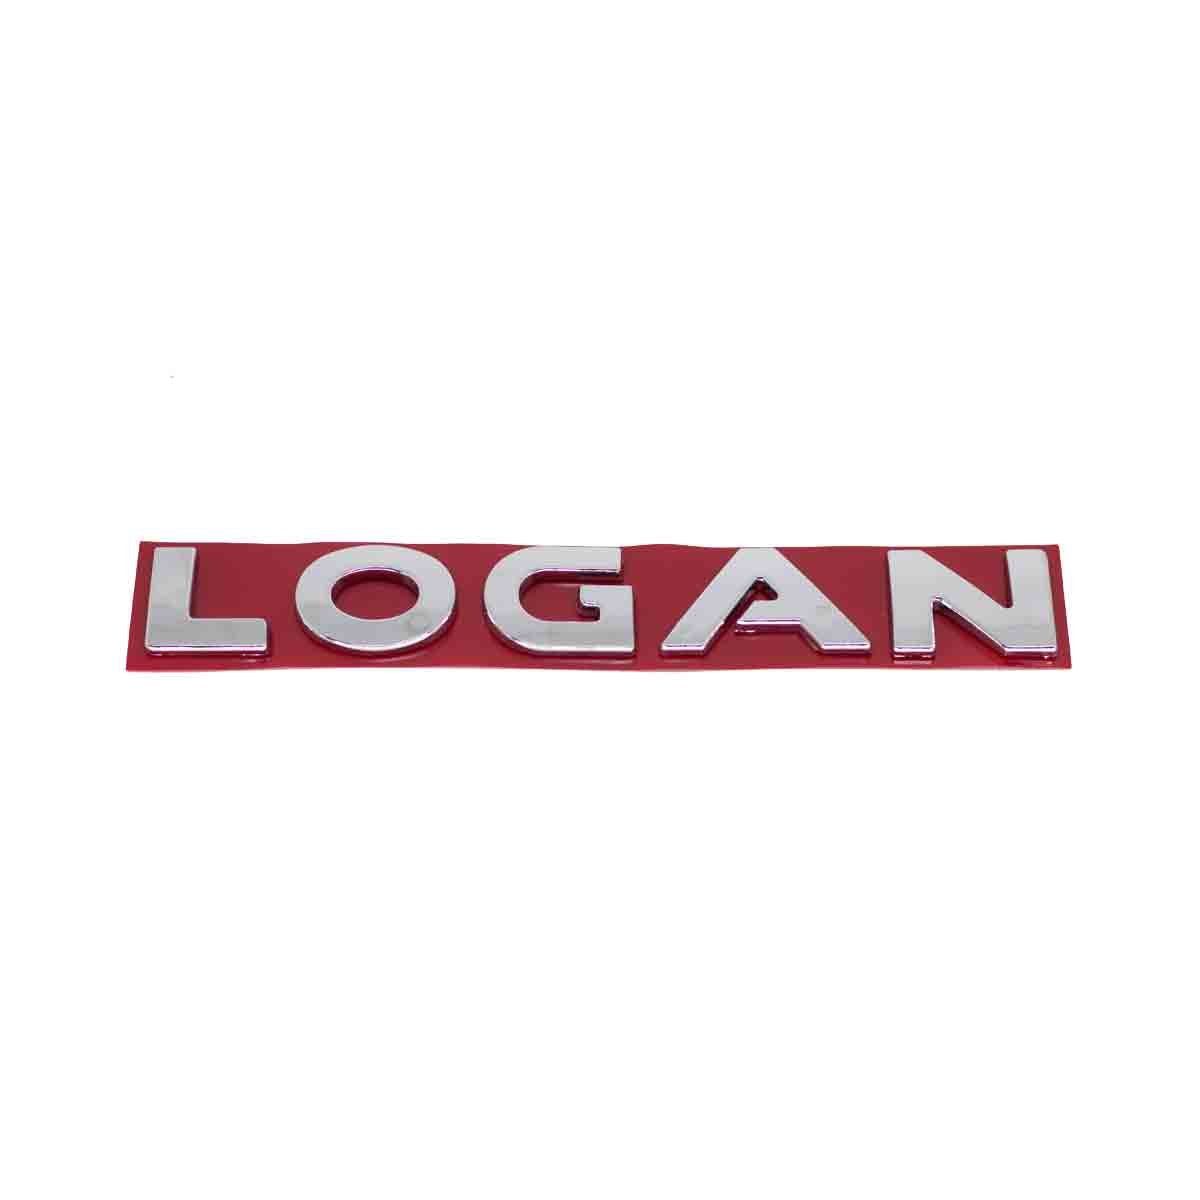 Emblema Logan 2013/ Cromado